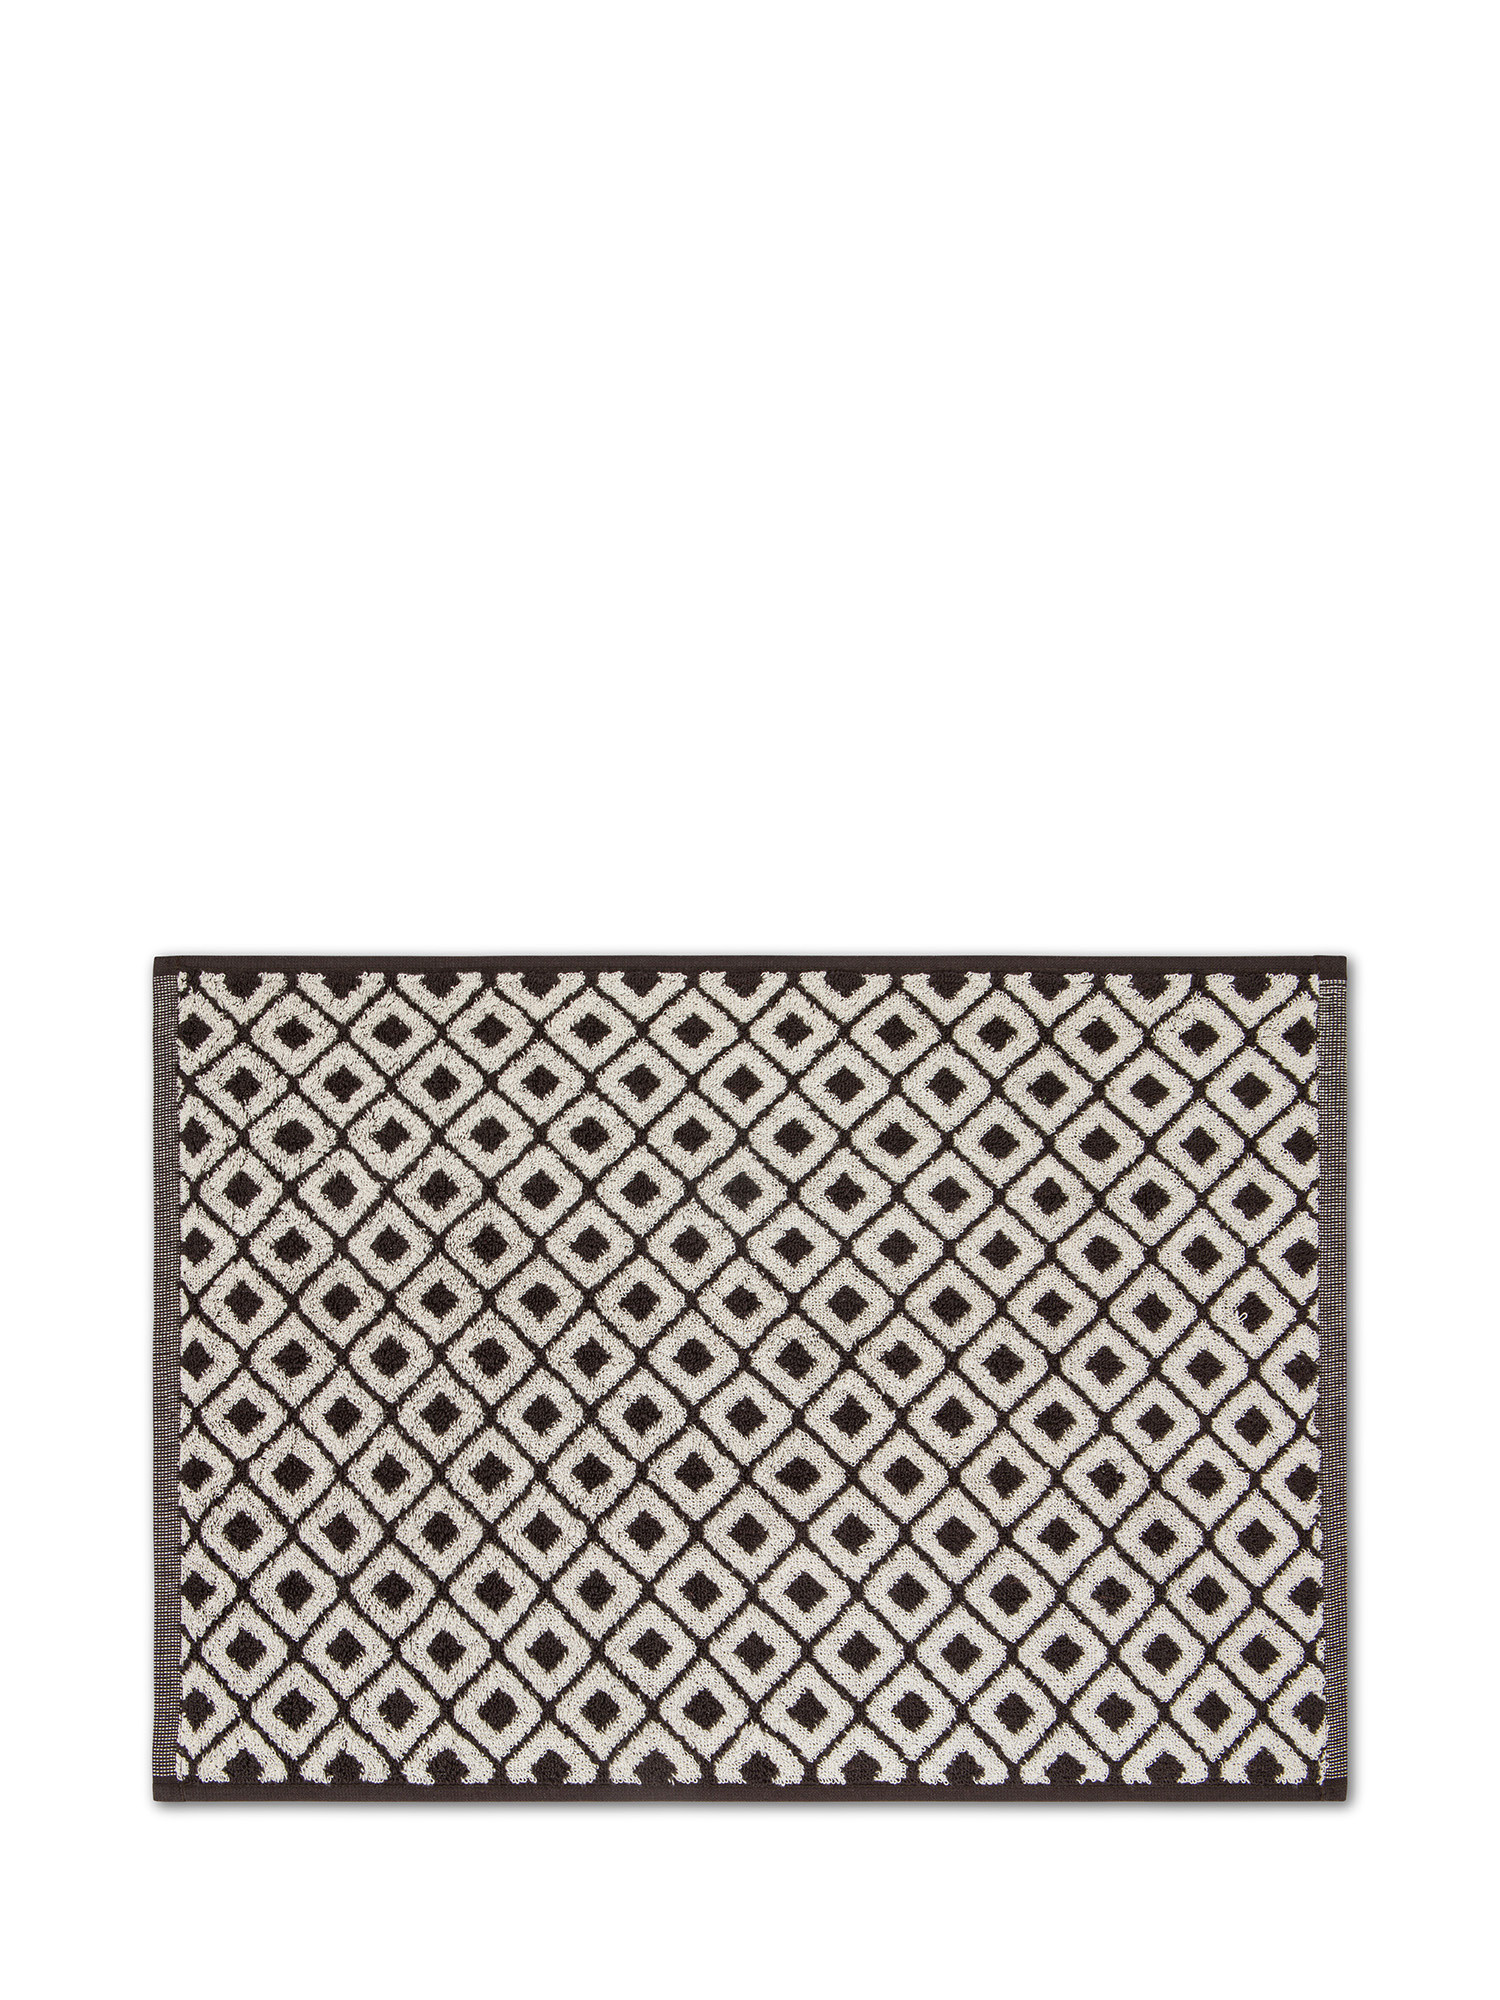 Asciugamano in spugna di cotone motivo quadri, Nero, large image number 1